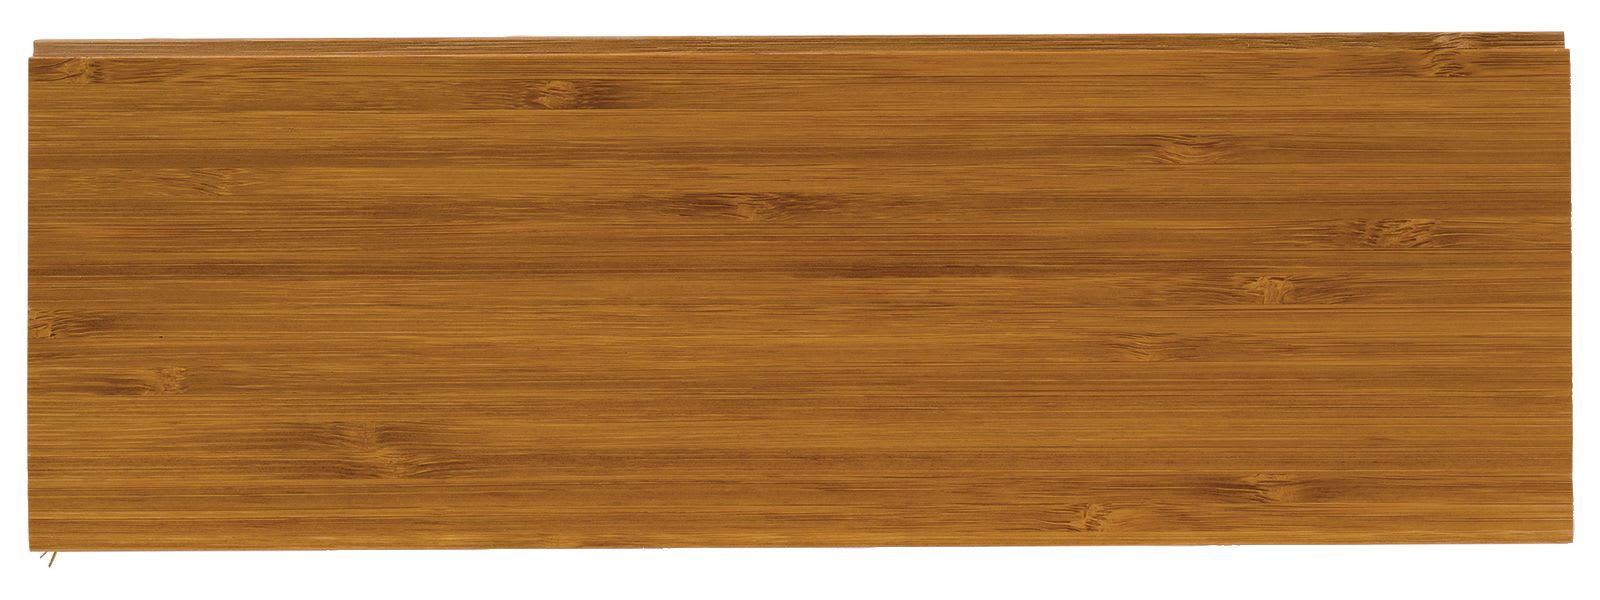 W by Woodpecker Caramel Bamboo Flooring - Sample